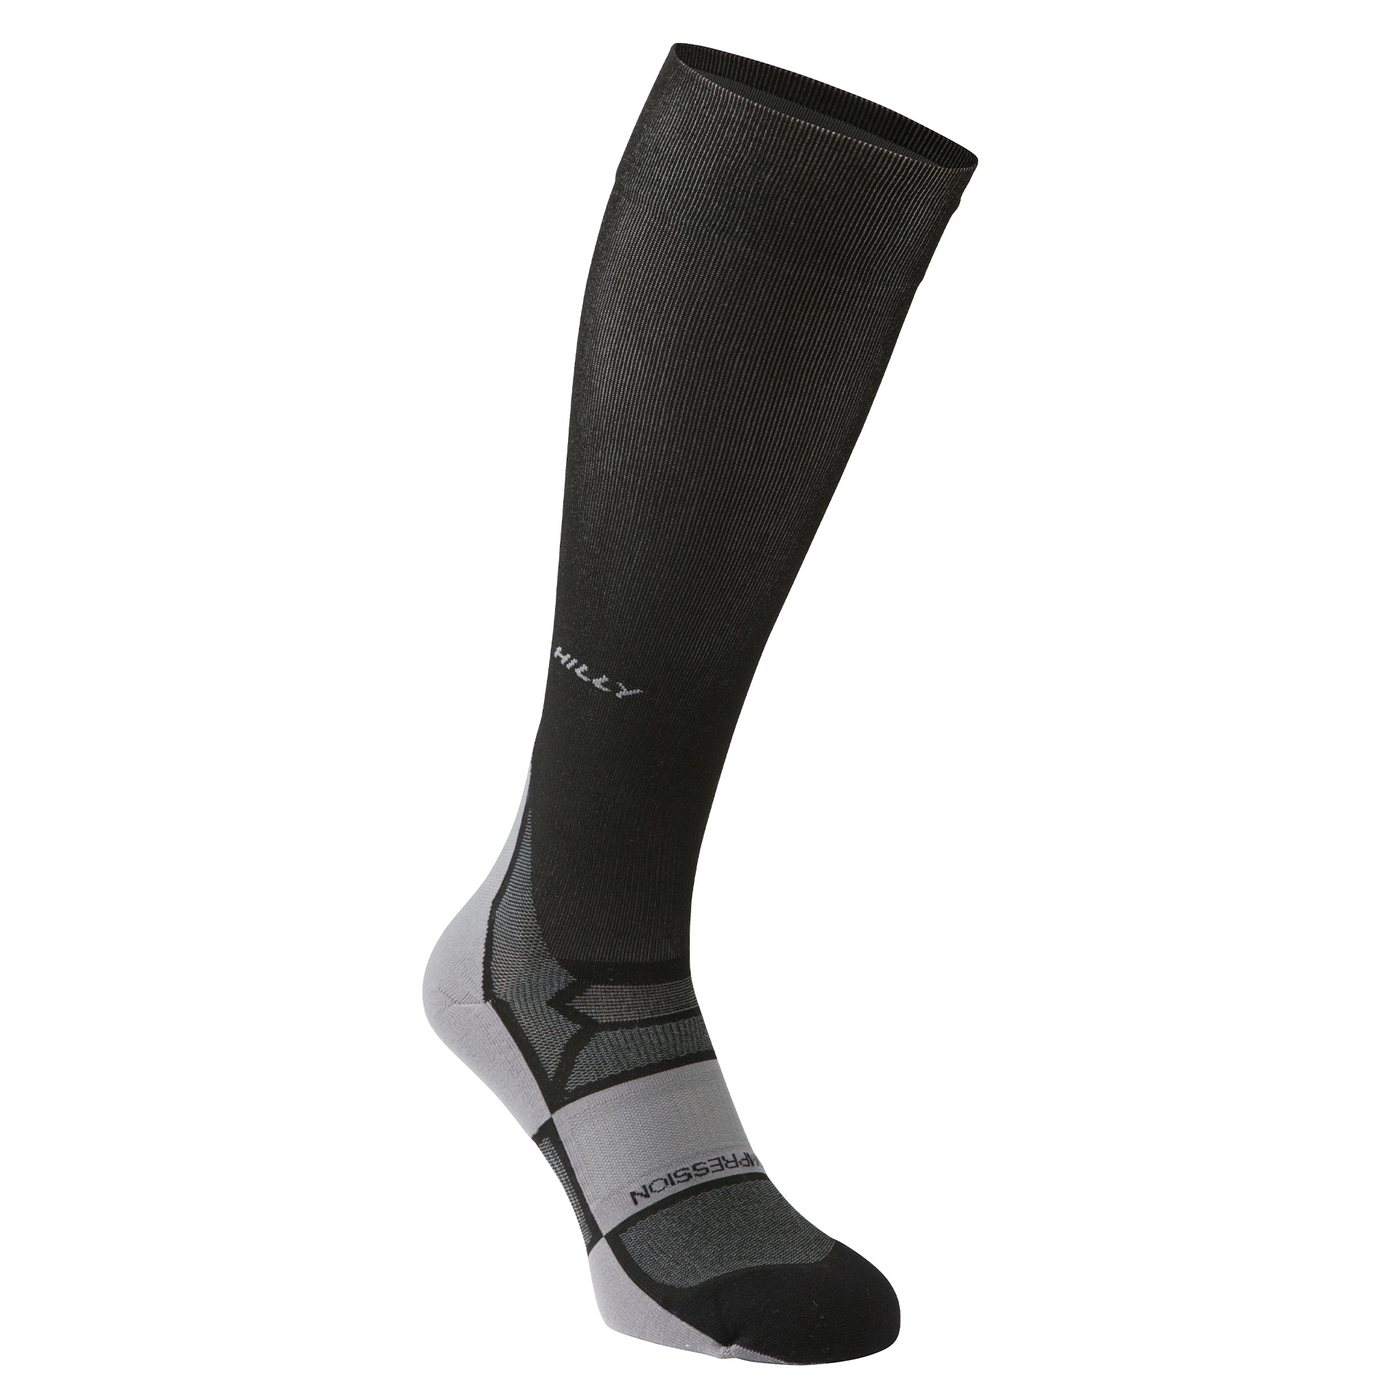 Hilly Pulse Compression Sock - Black/ Grey